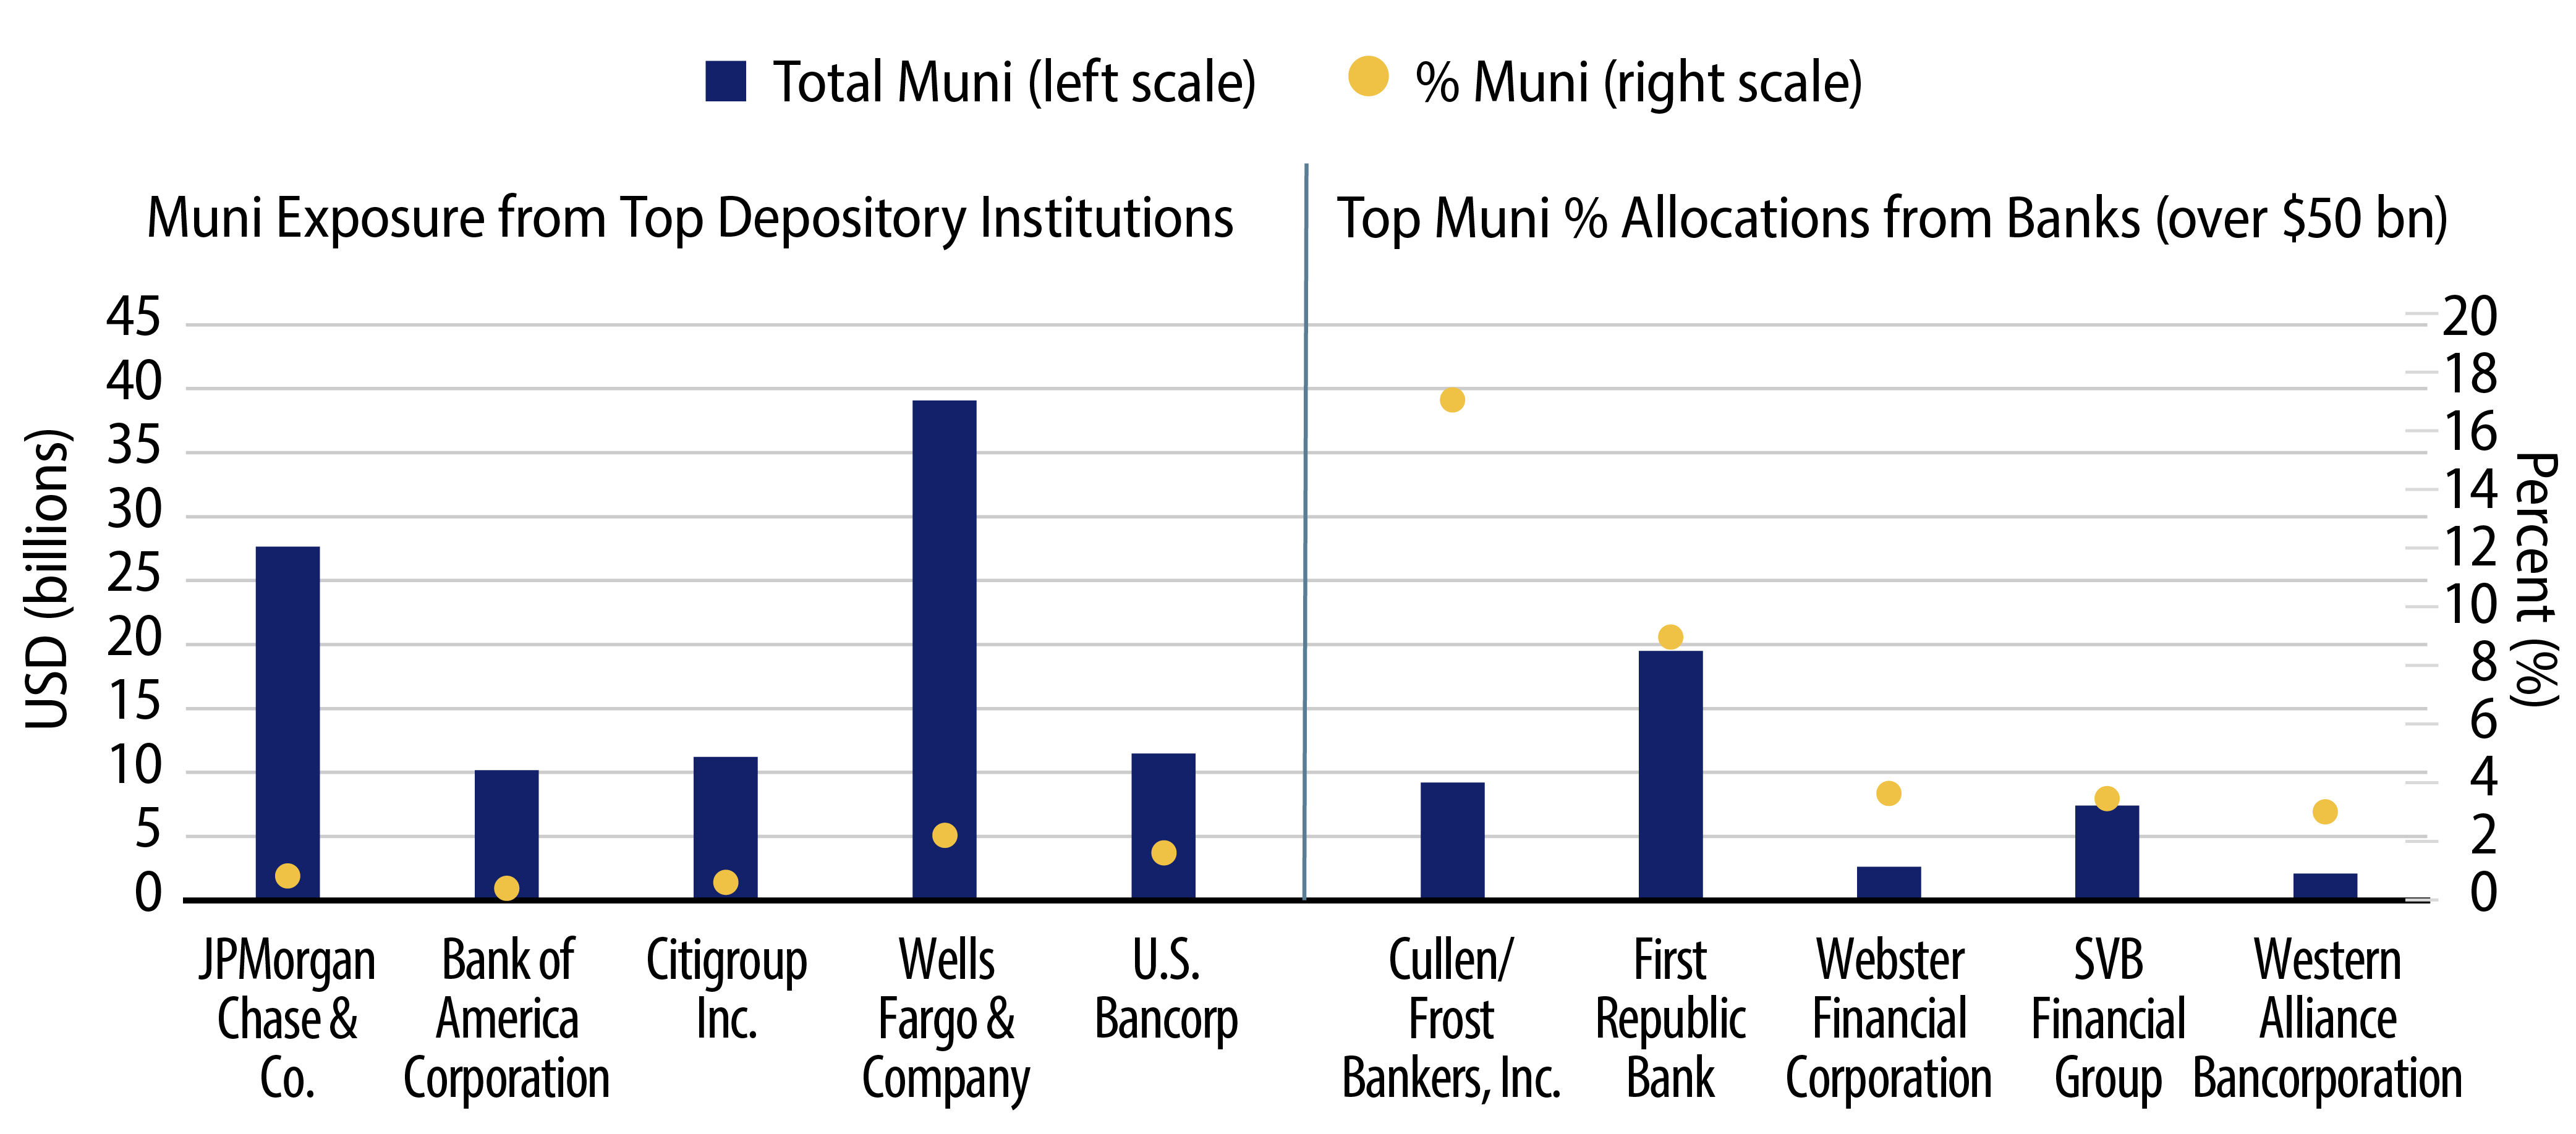 Explore Banking Muni Exposure and Allocations